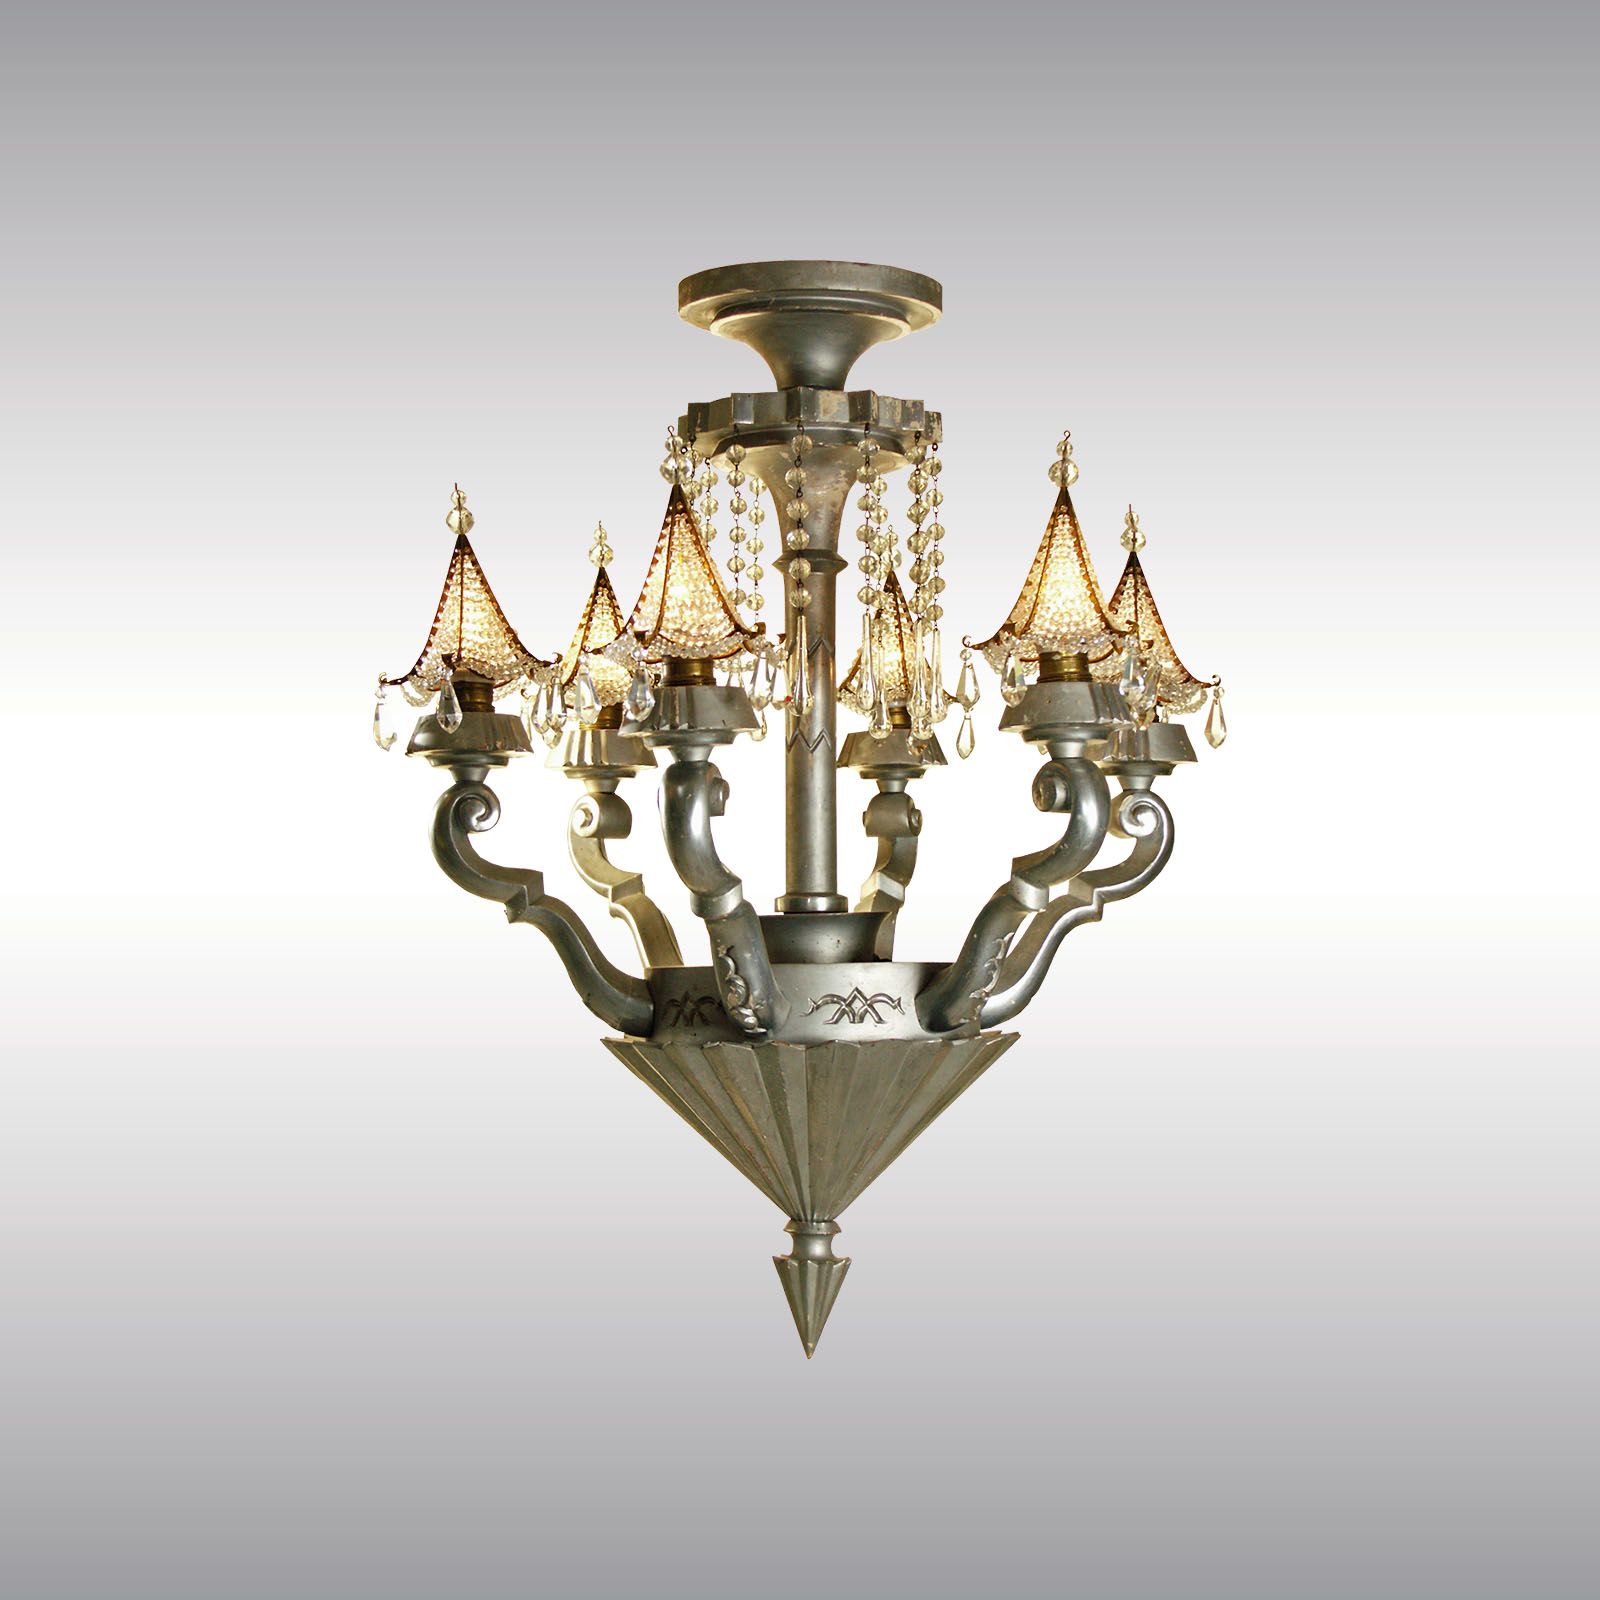 WOKA LAMPS VIENNA - OrderNr.: 4044|Art-Deco Luster - Design: Austrian Mastercraft